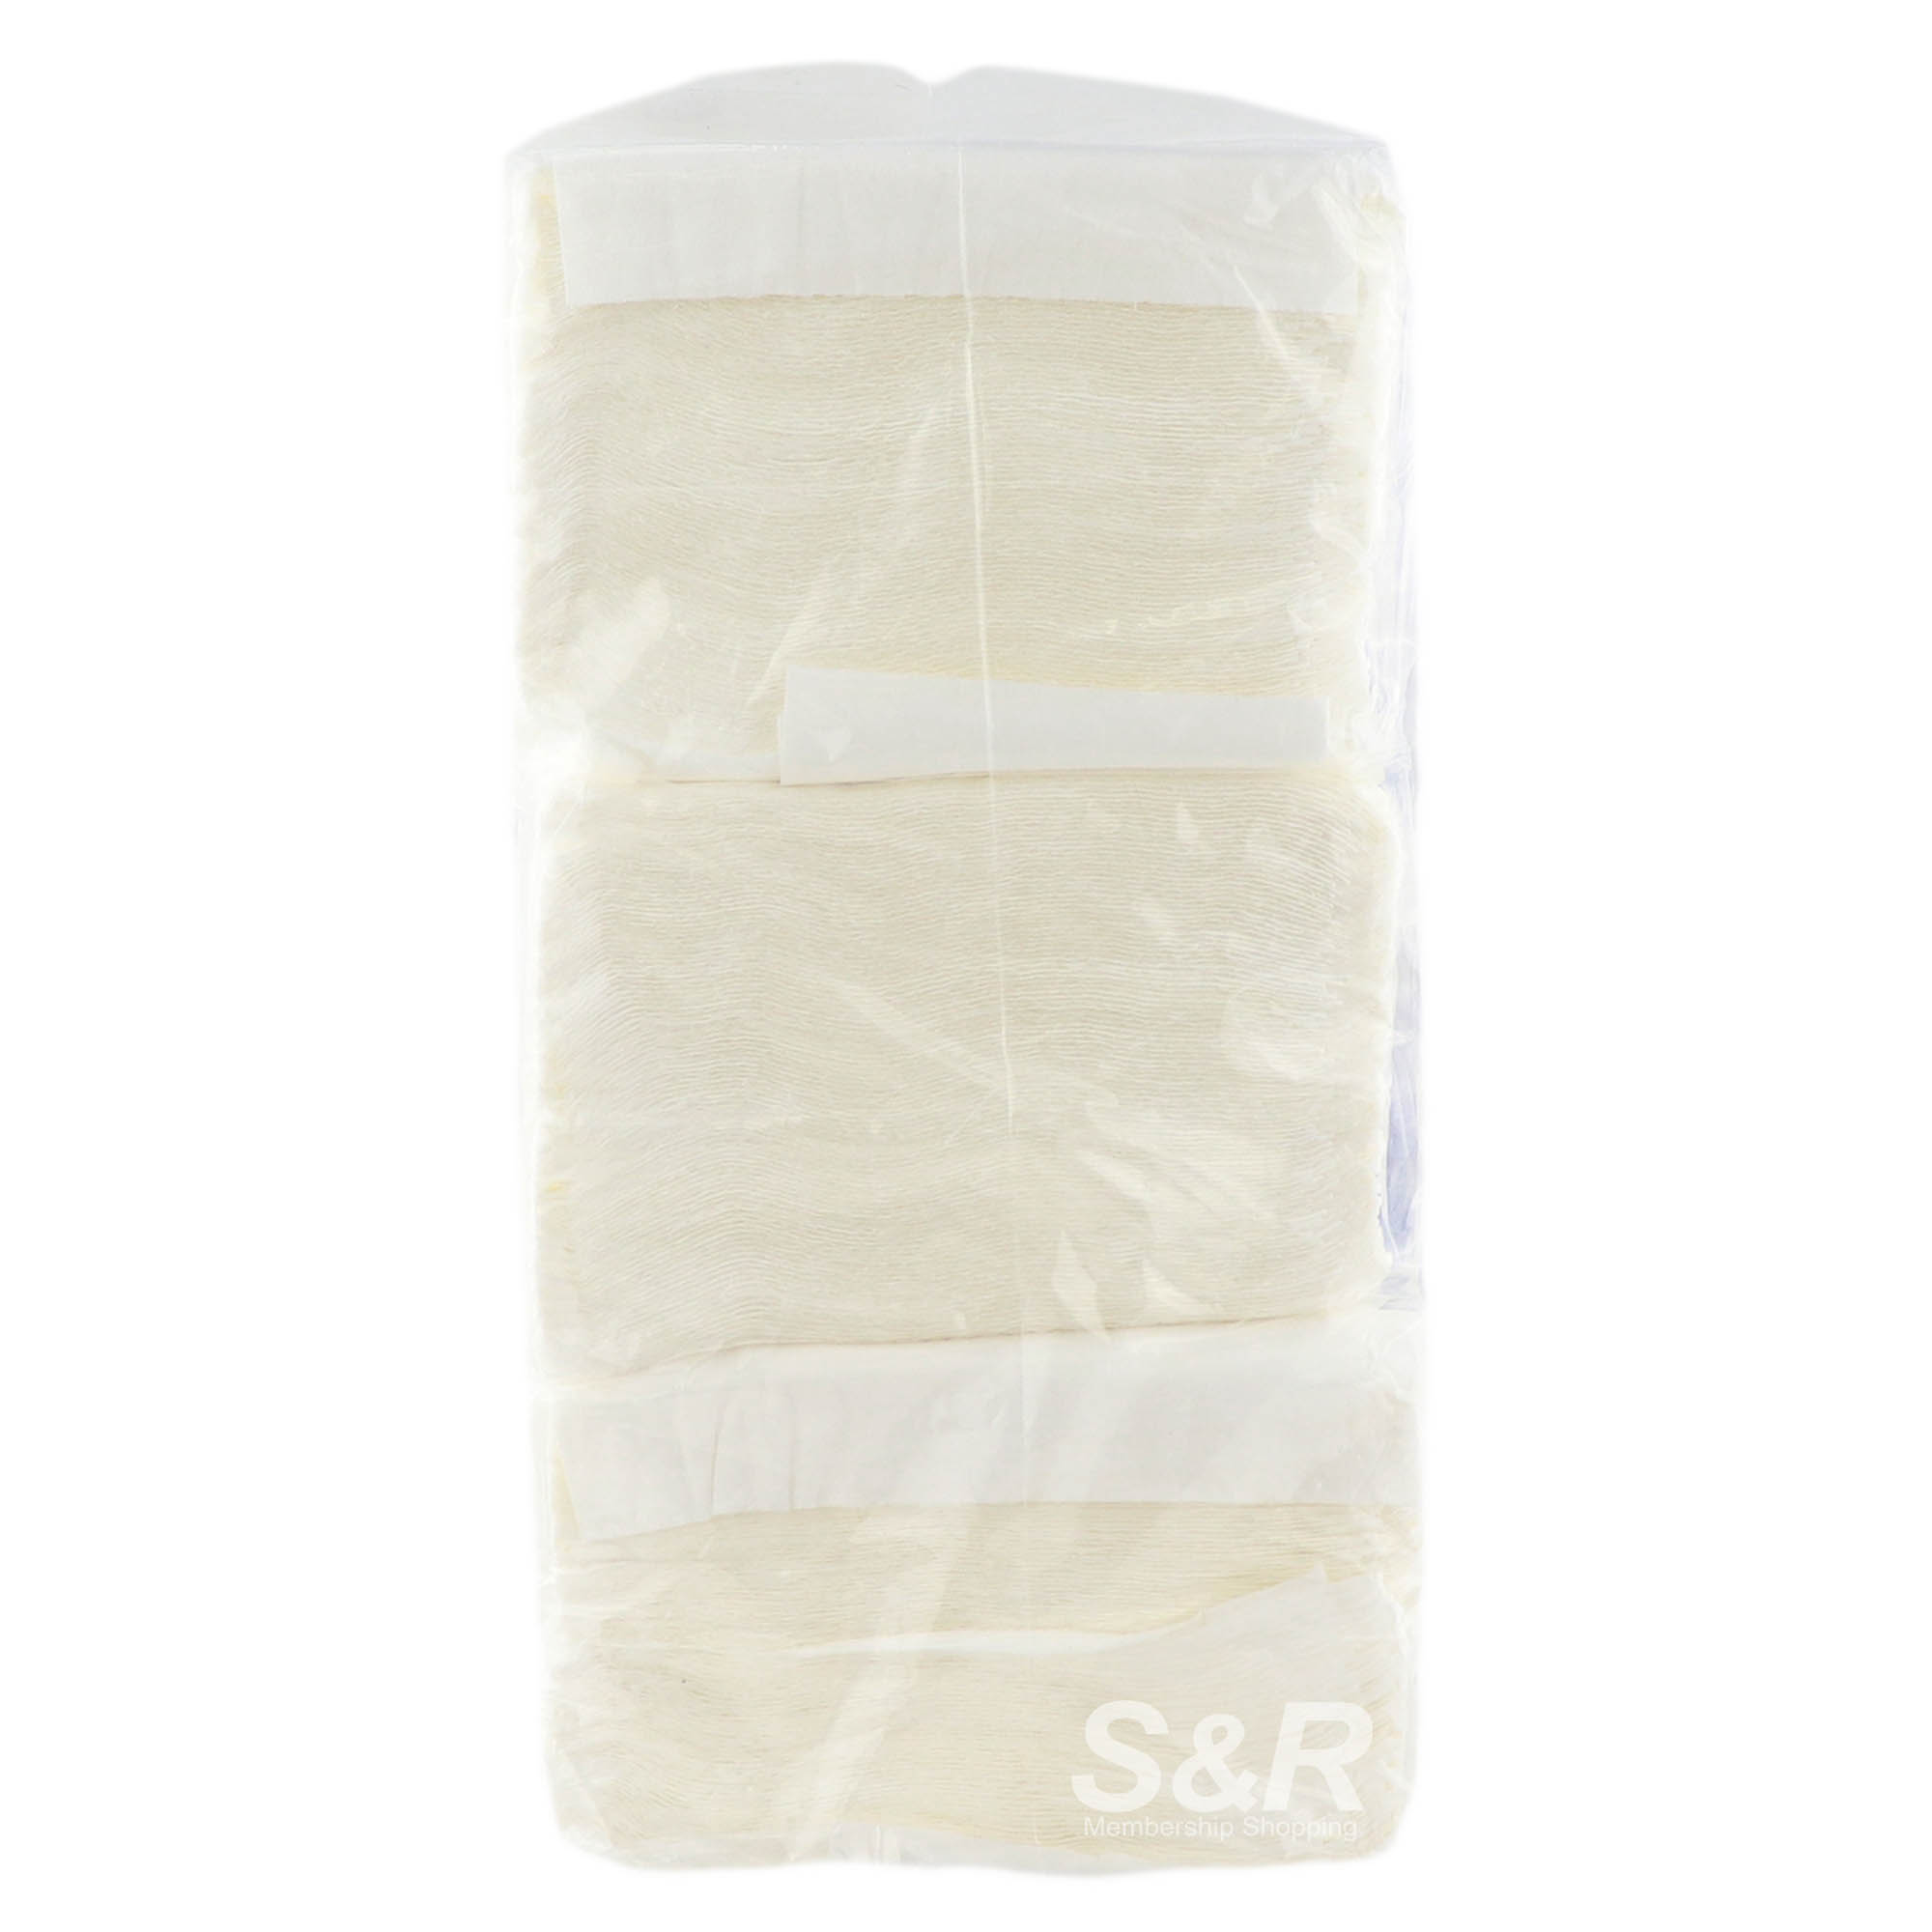 S&R Membership Shopping 2-Ply All Purpose Tissue 6 packs